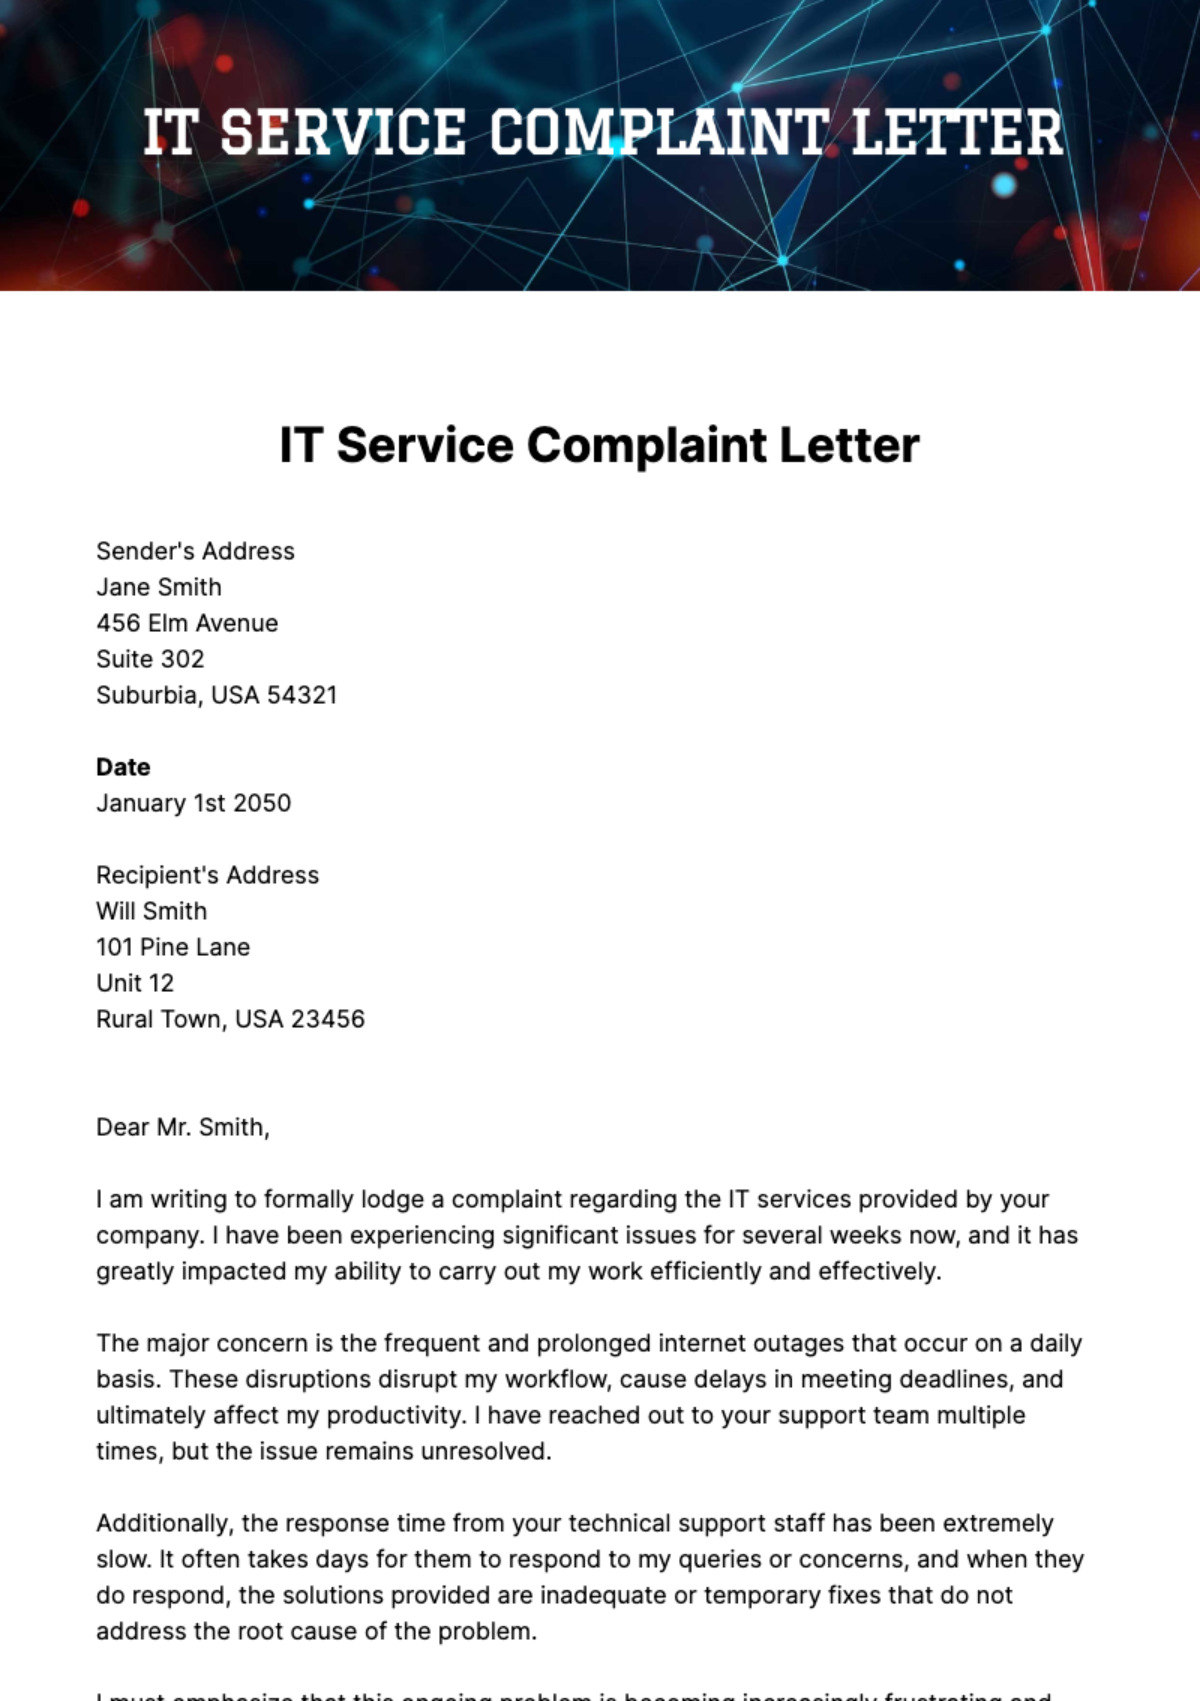 Free IT Service Complaint Letter Template